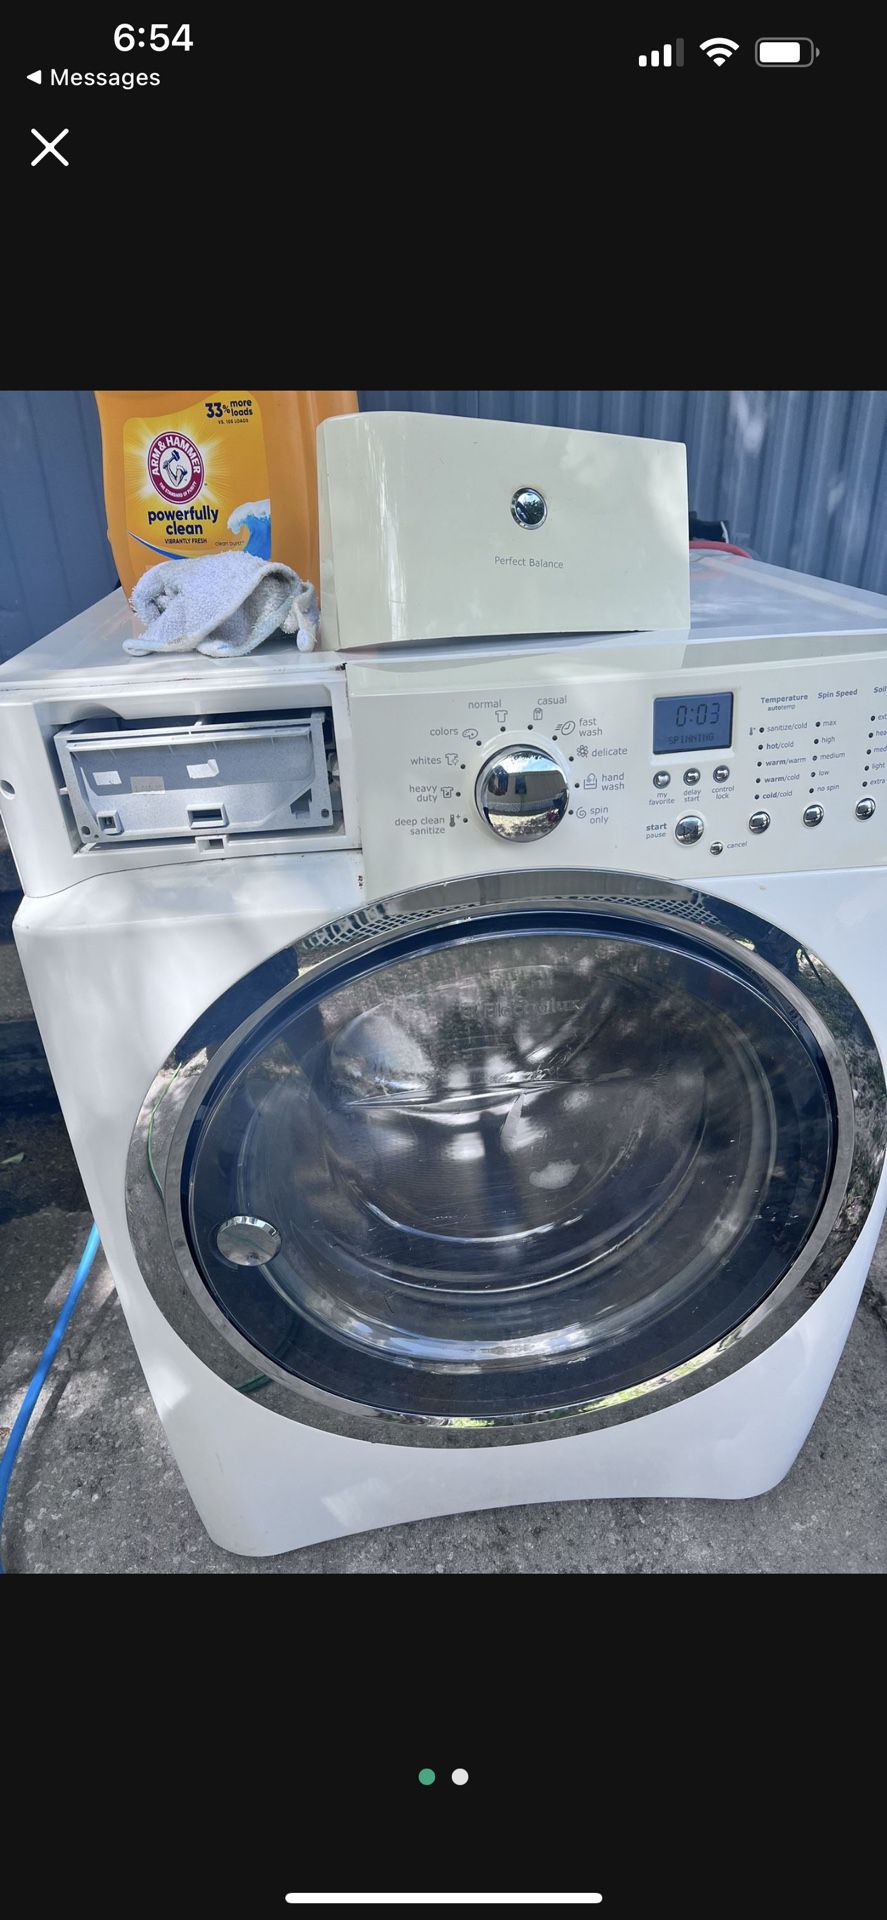 Washer Dryer Set For Sale